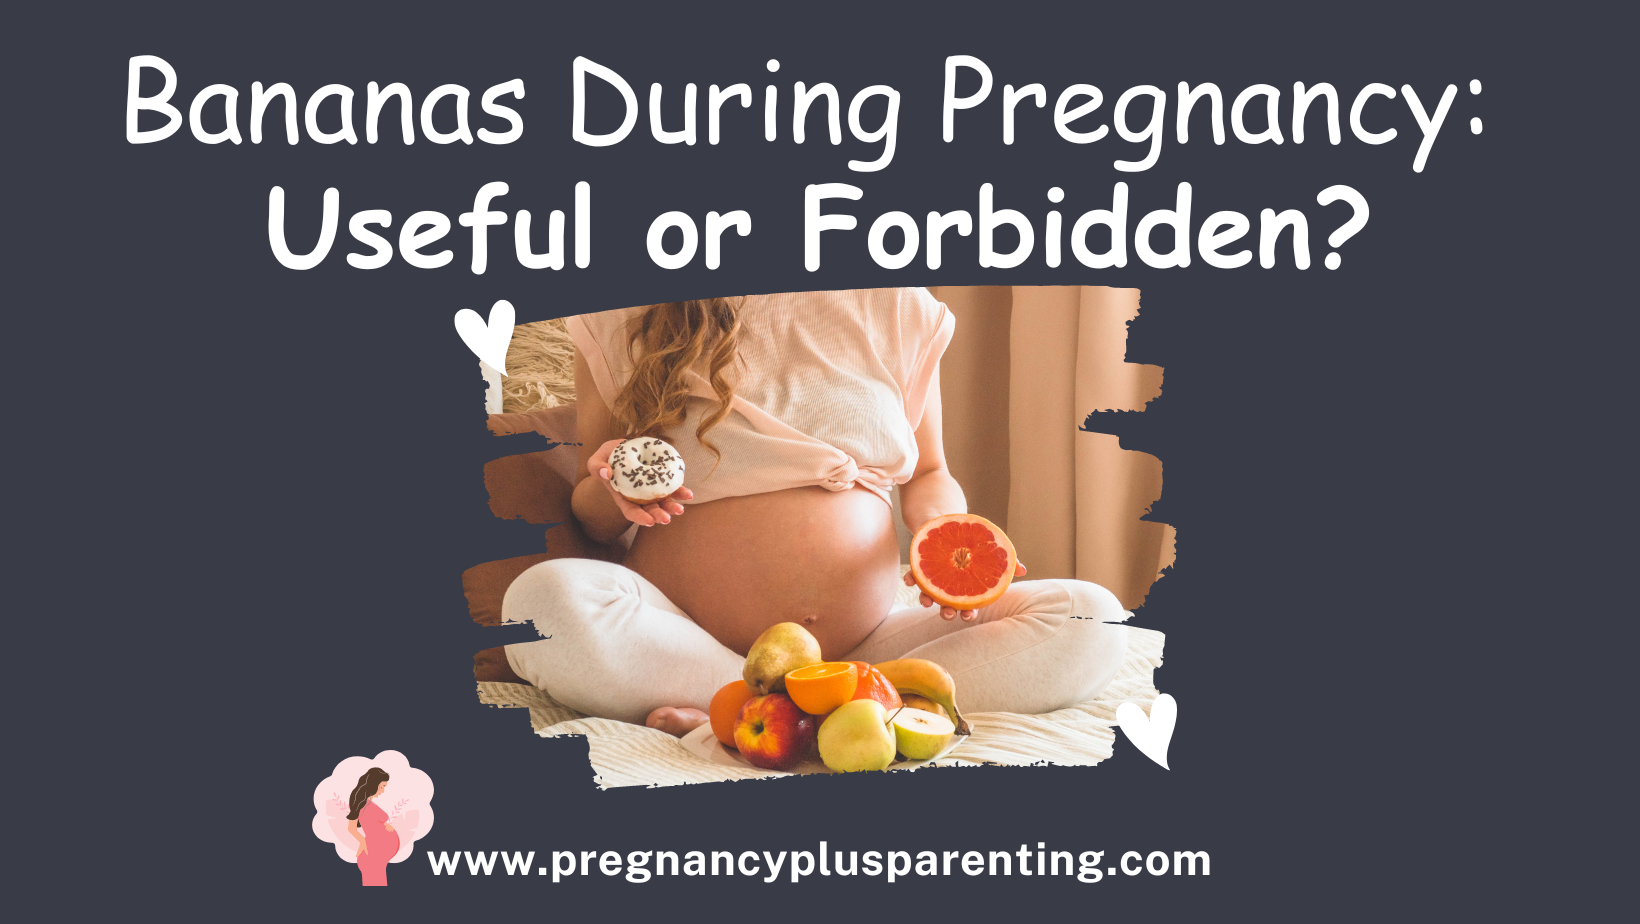 Bananas During Pregnancy: Useful or Forbidden?